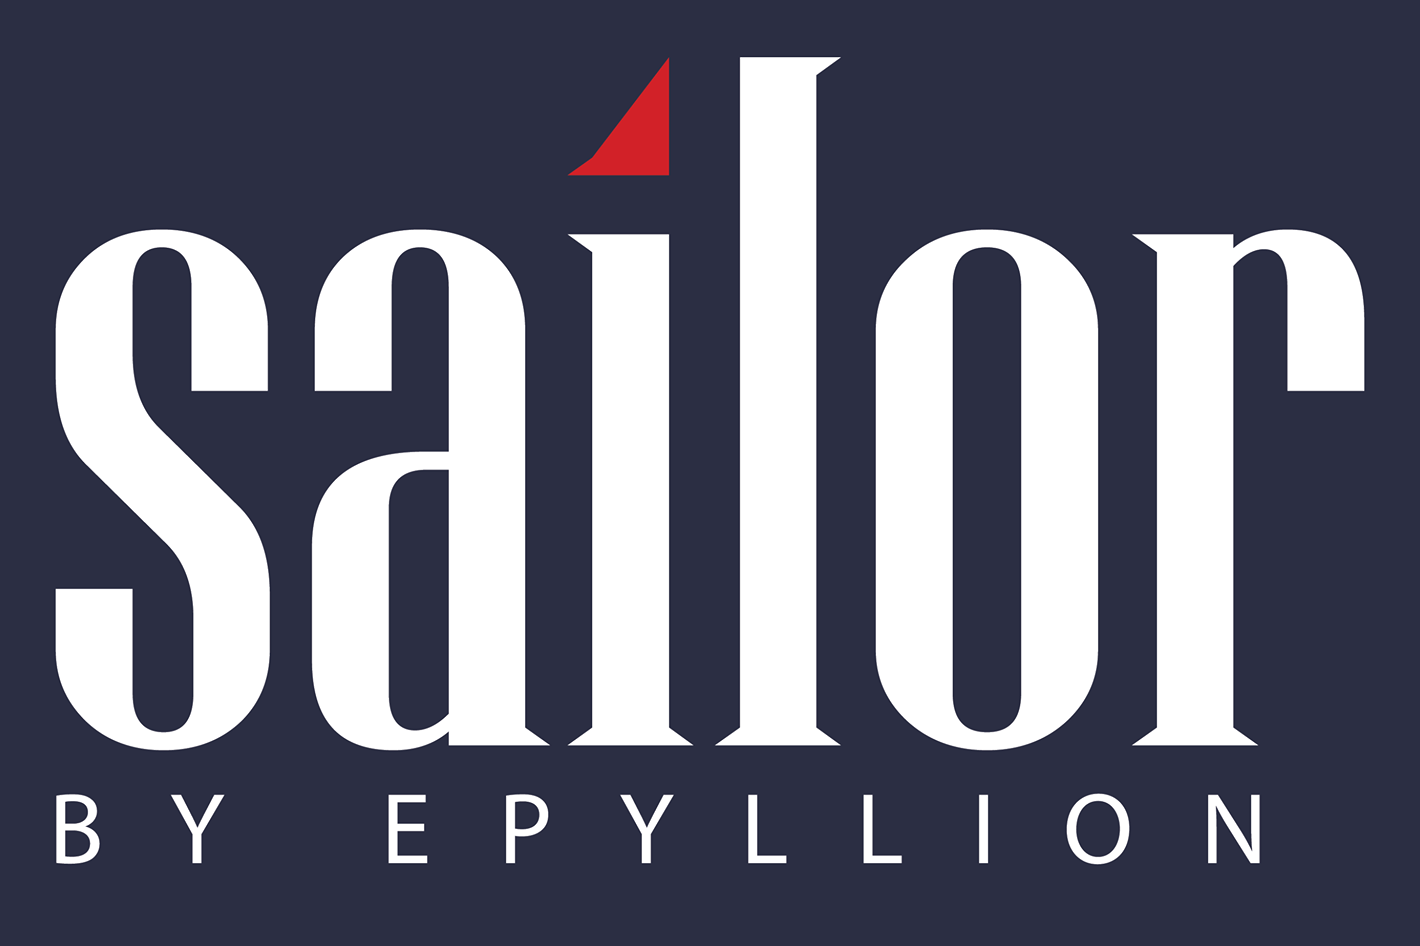 sailor